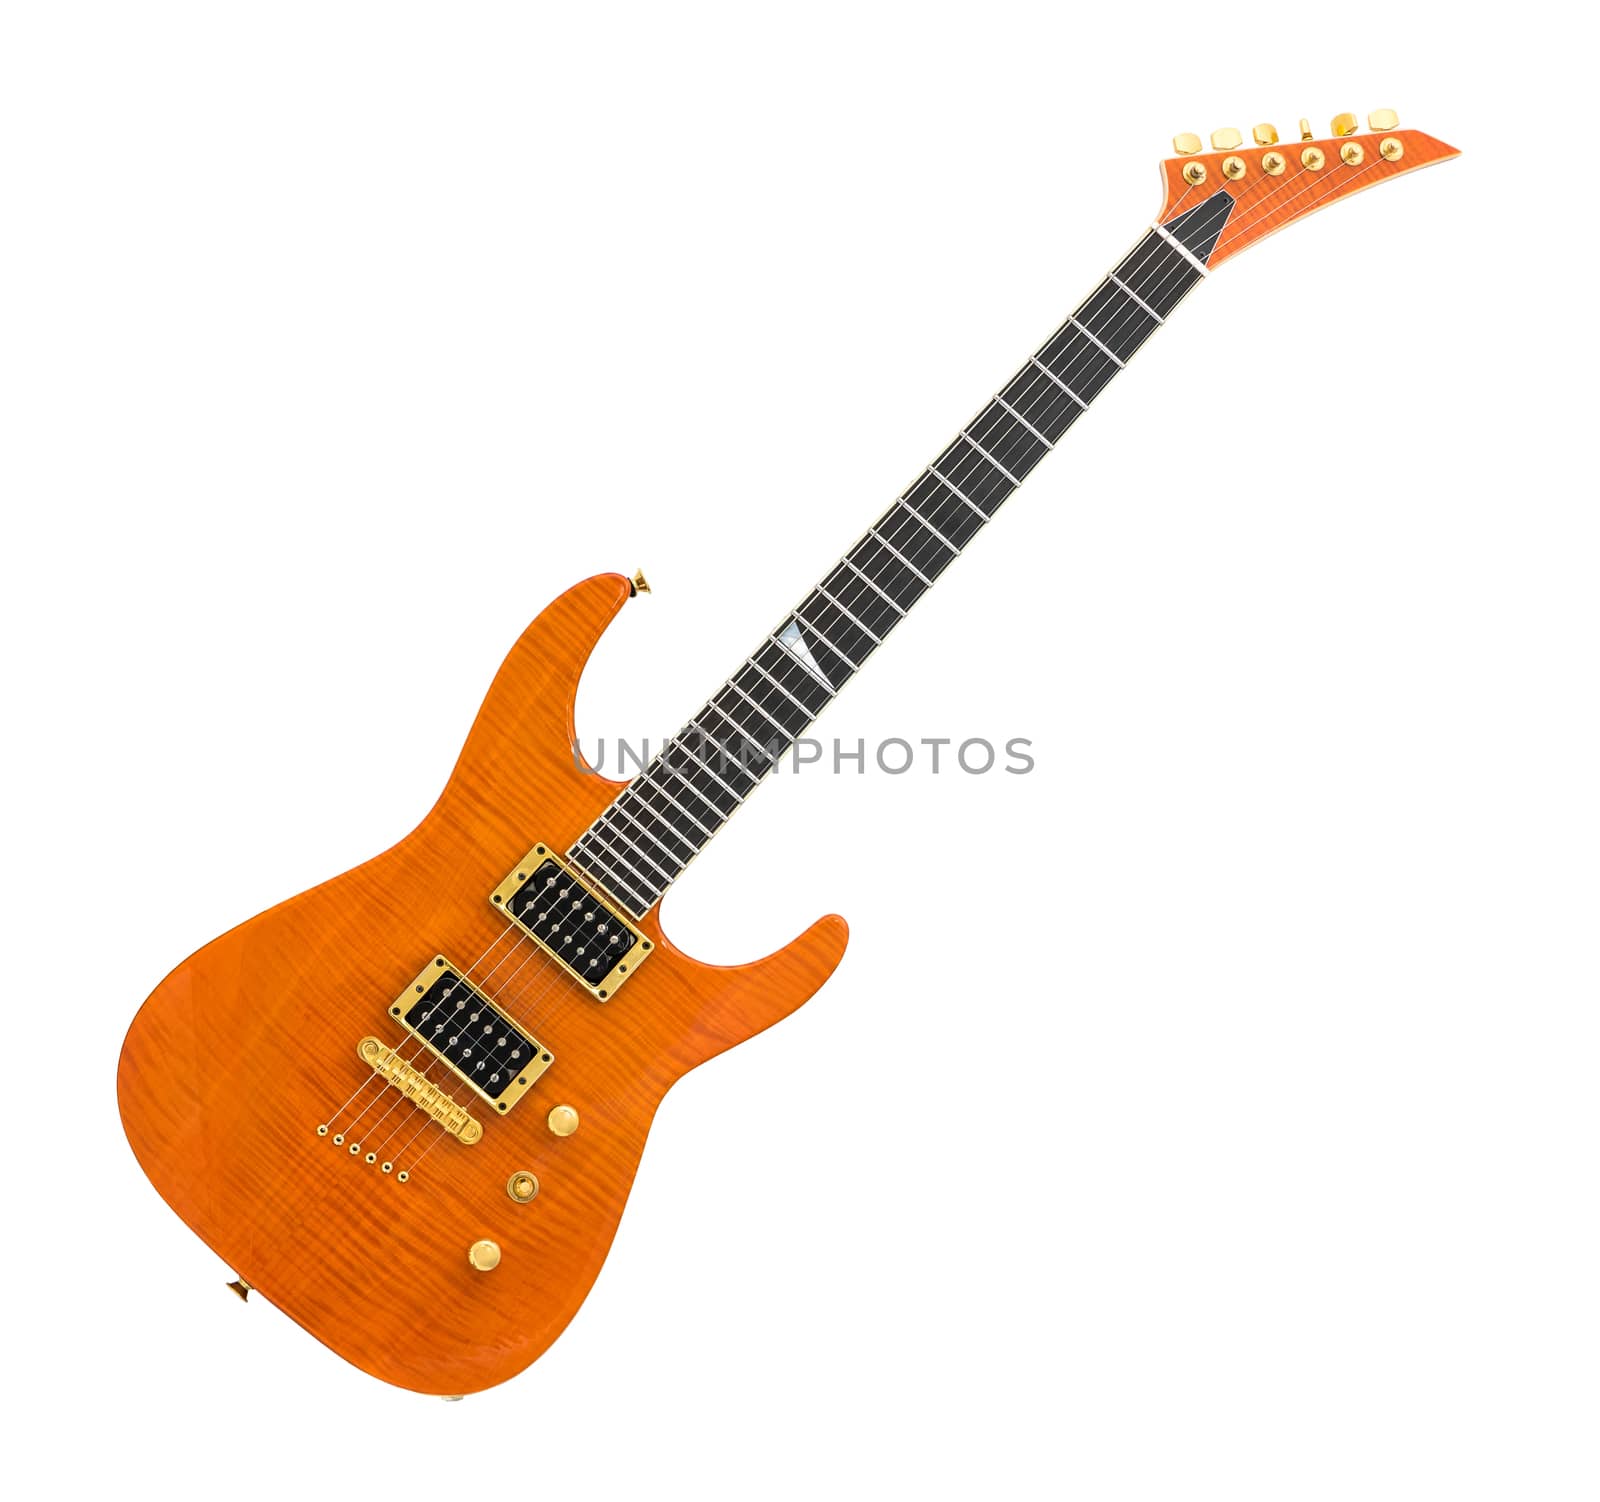 Orange Electric Guitar by Kayco